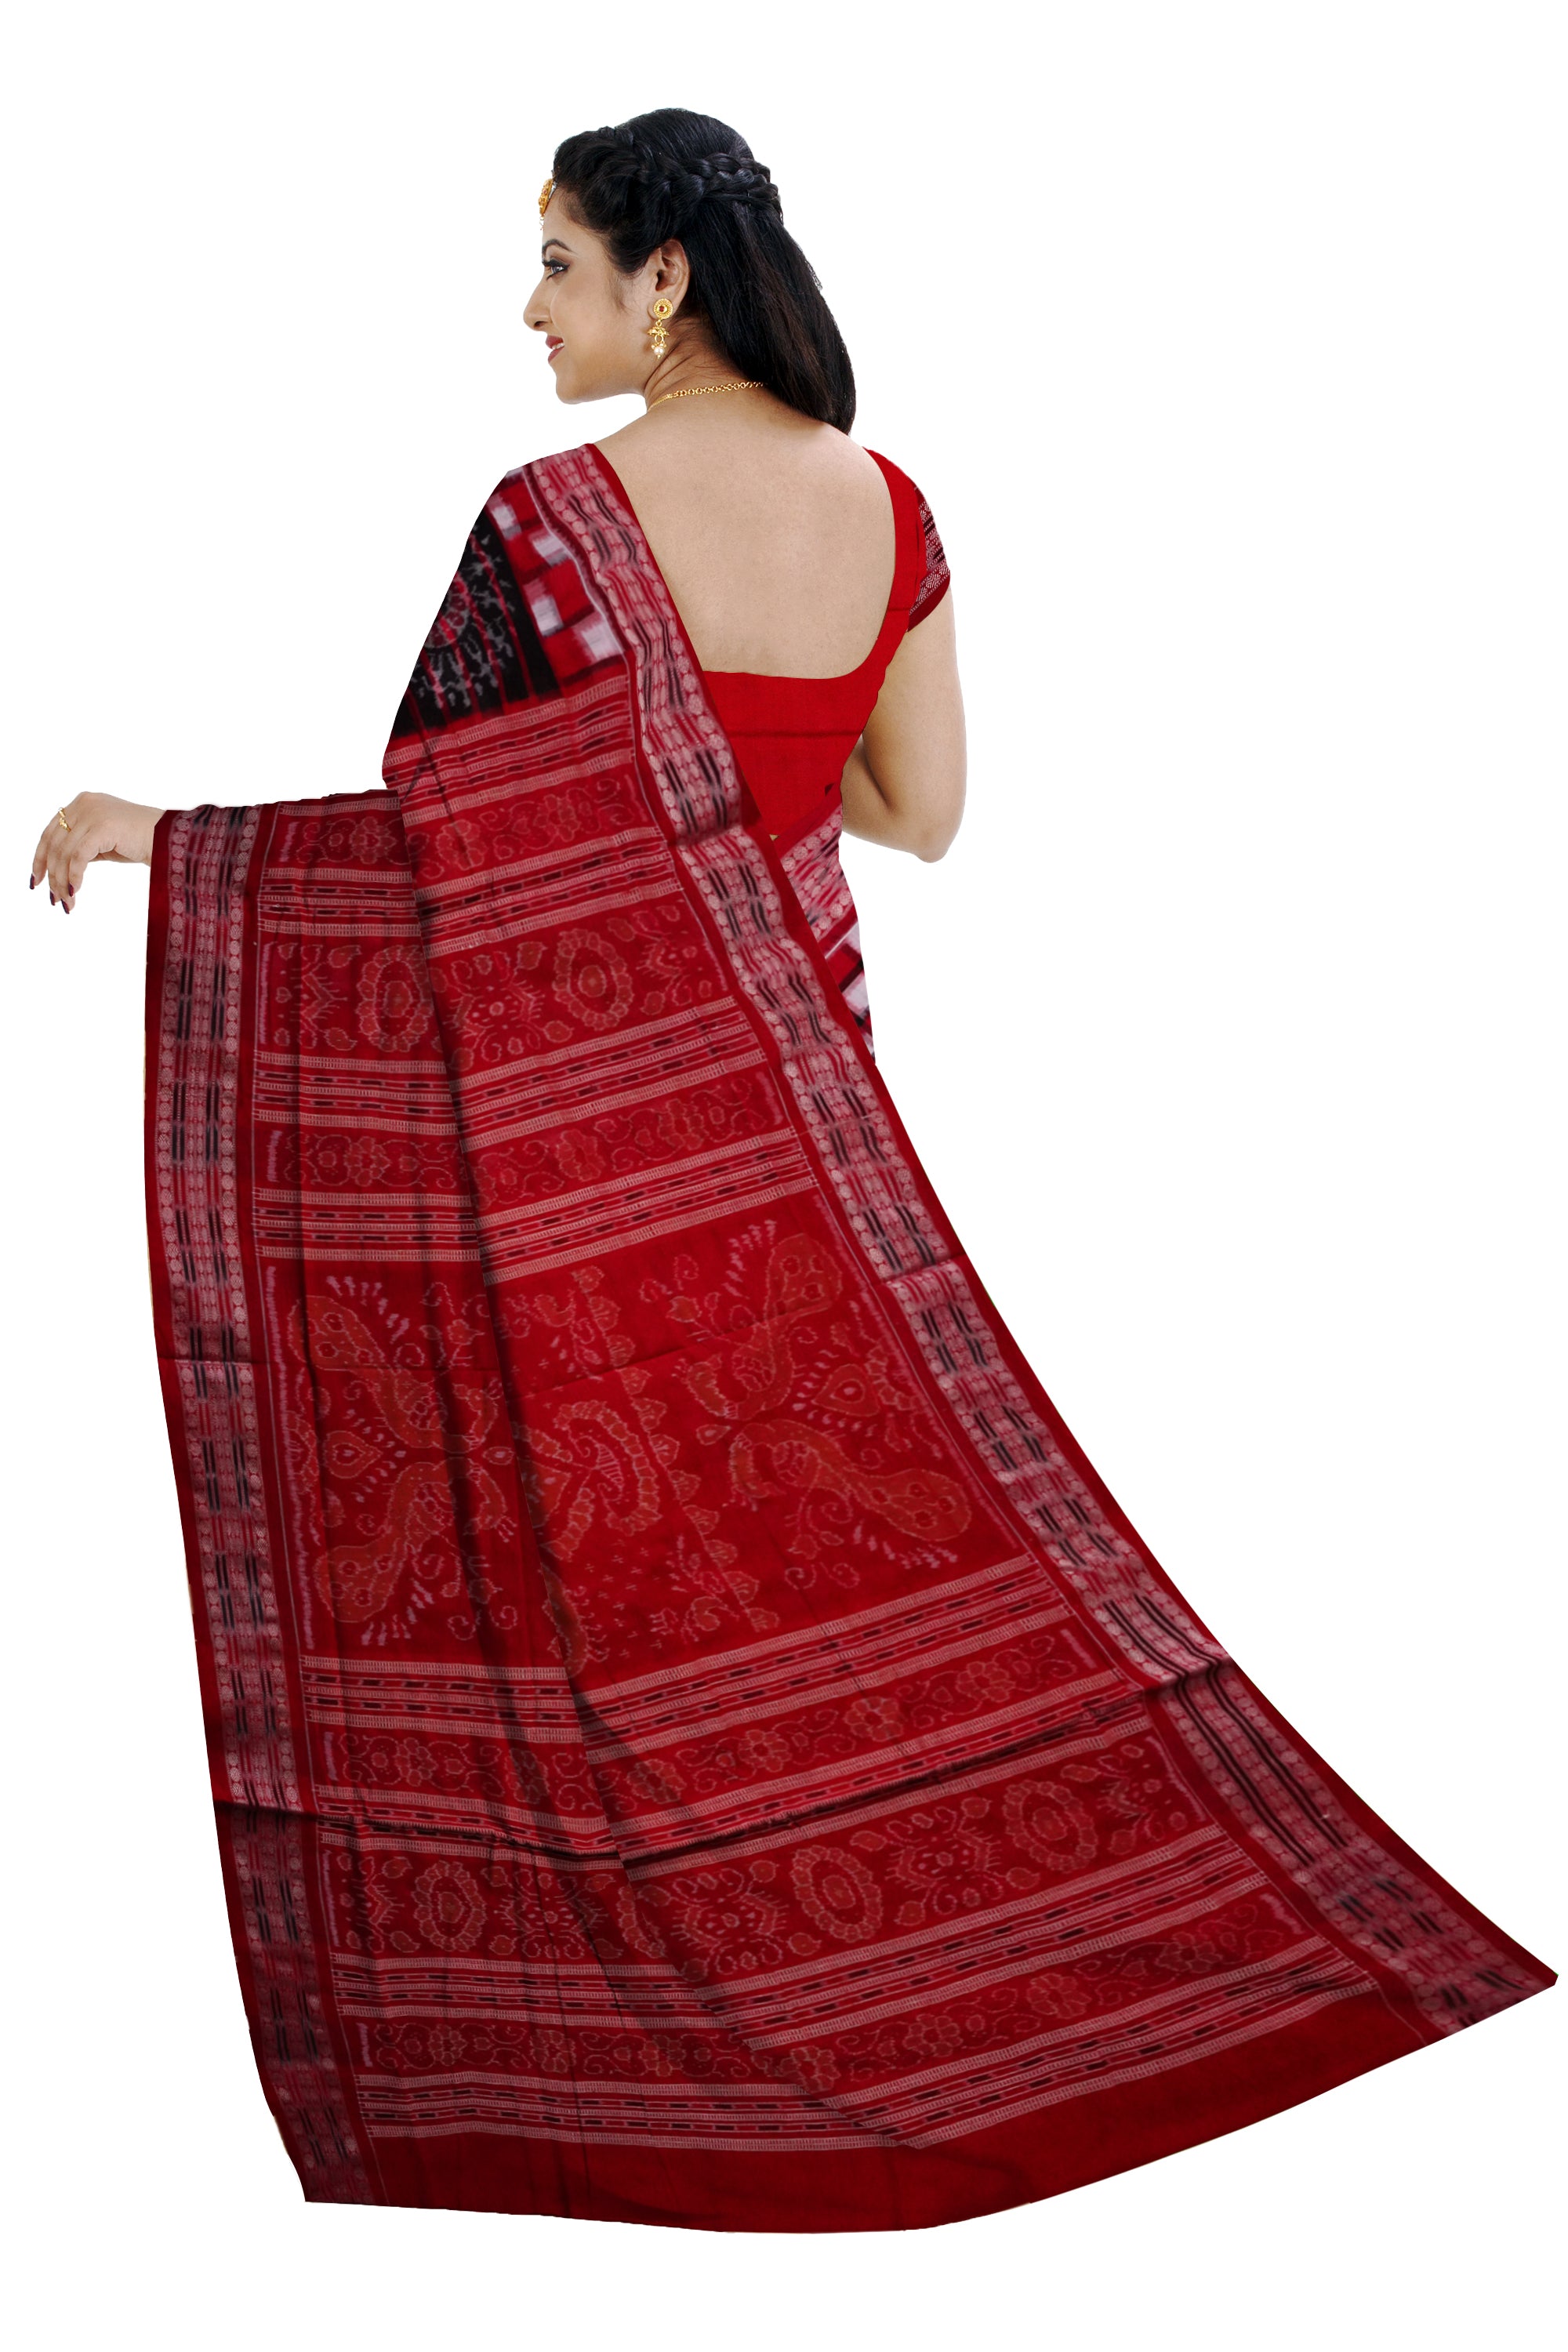 Red, black and White color box pattern sambalpuri cotton saree. - Koshali Arts & Crafts Enterprise